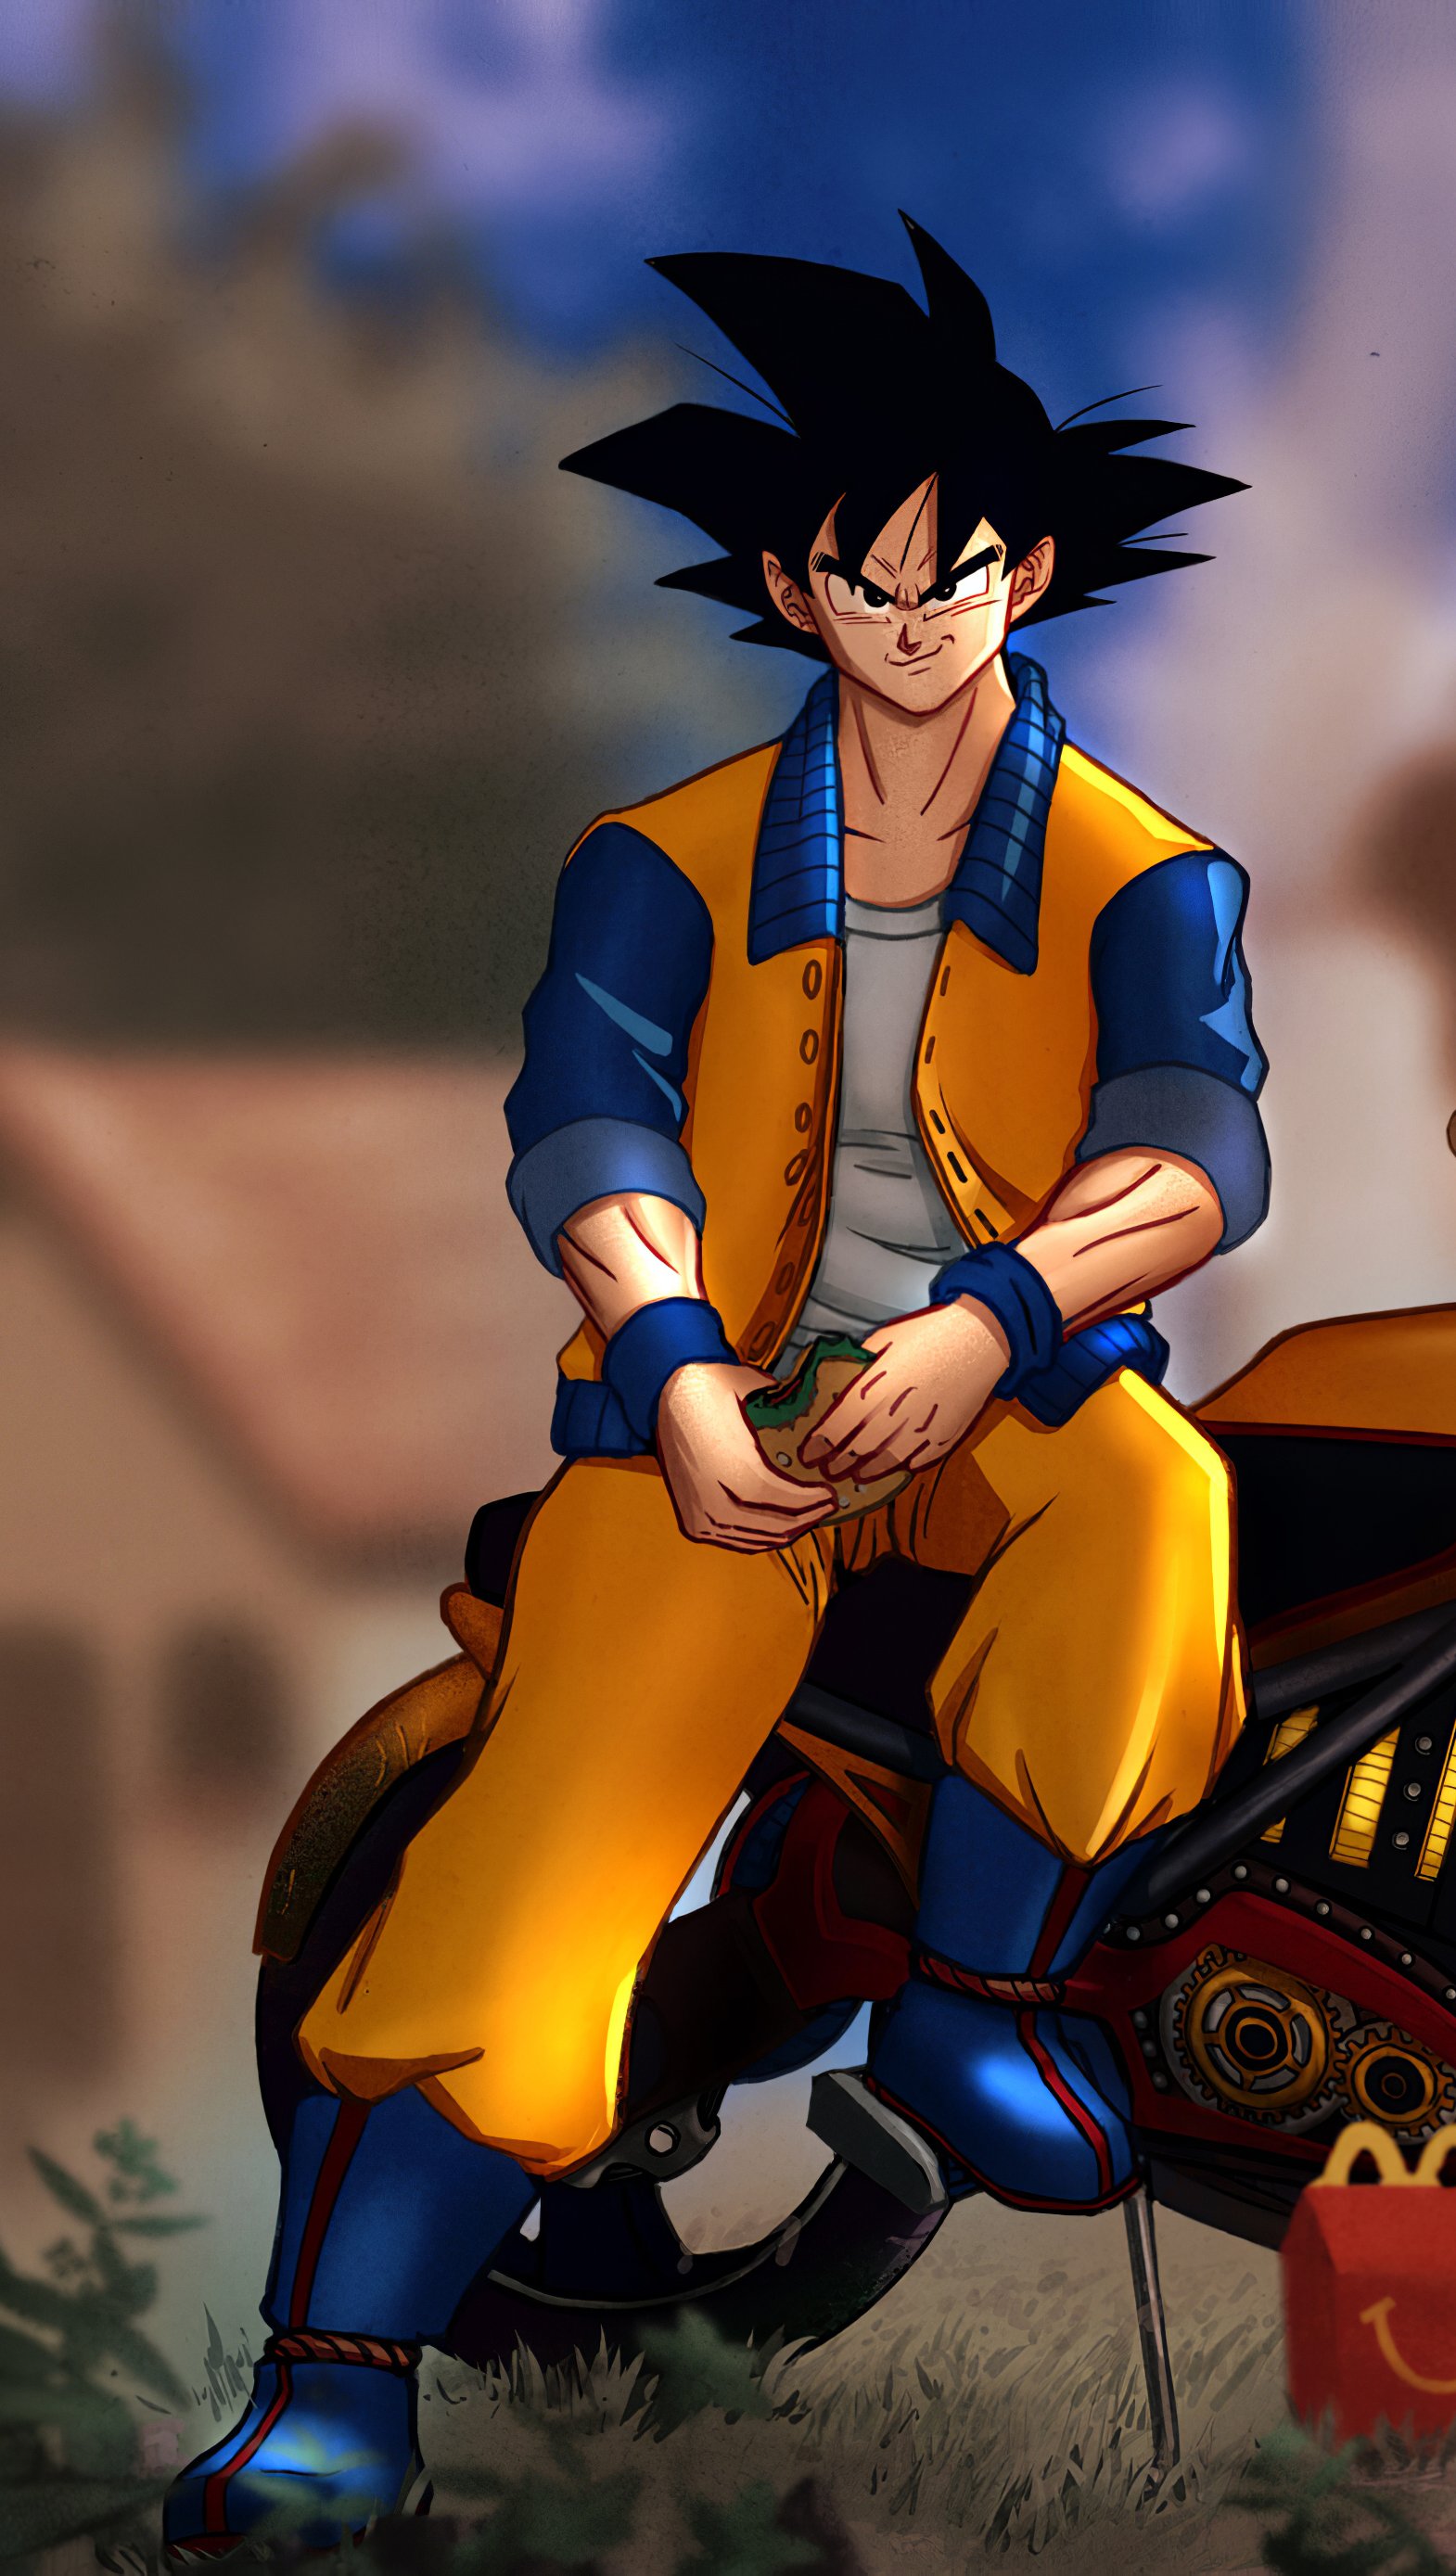 Goku in motocycle Wallpaper 4k Ultra HD ID:5238